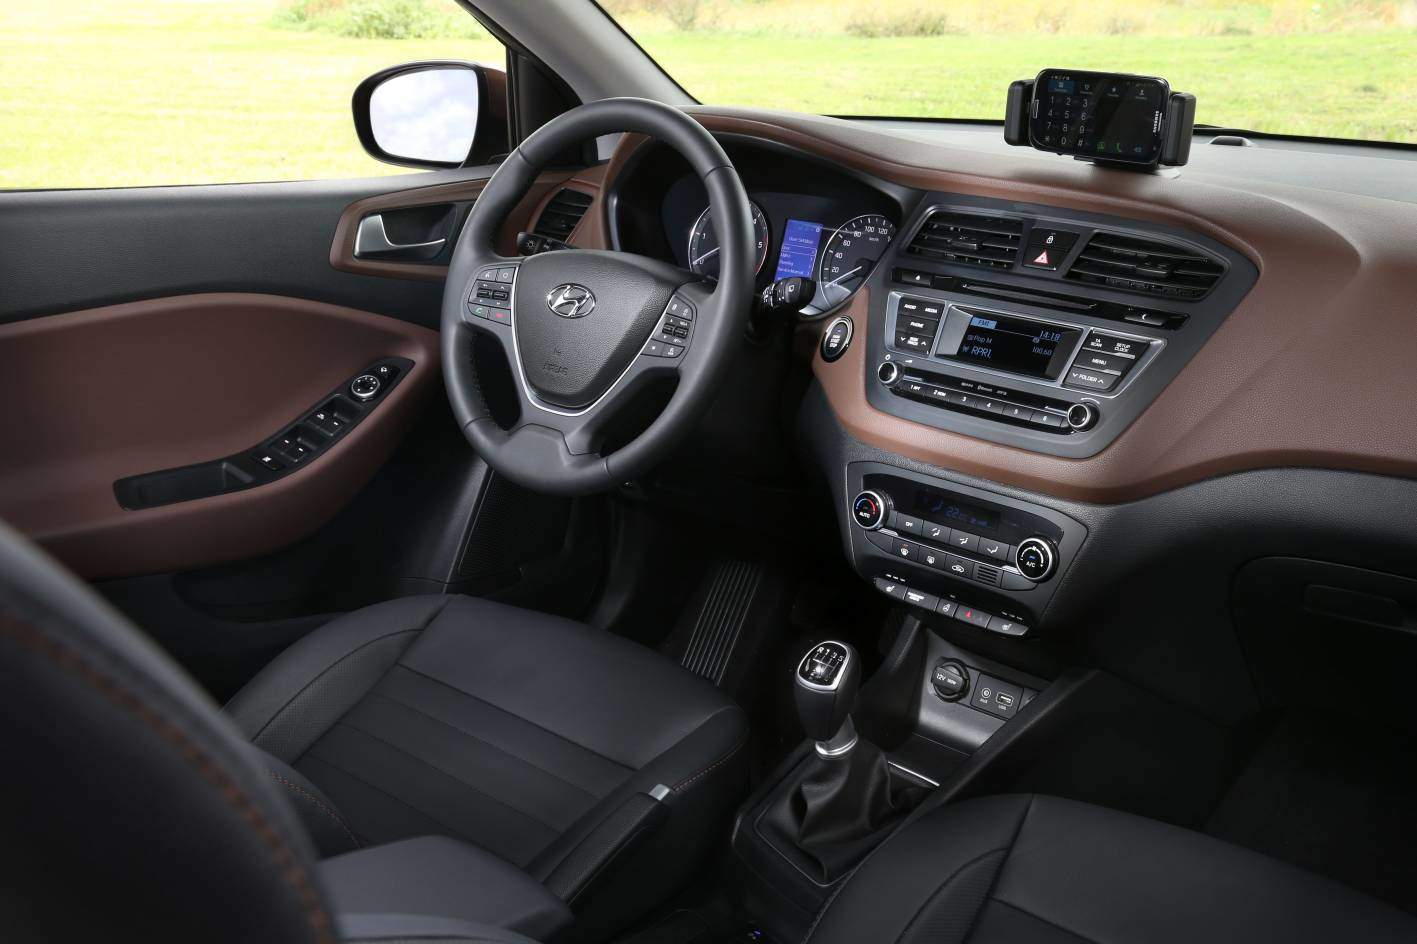 Hyundai i20 upgraded interior shown